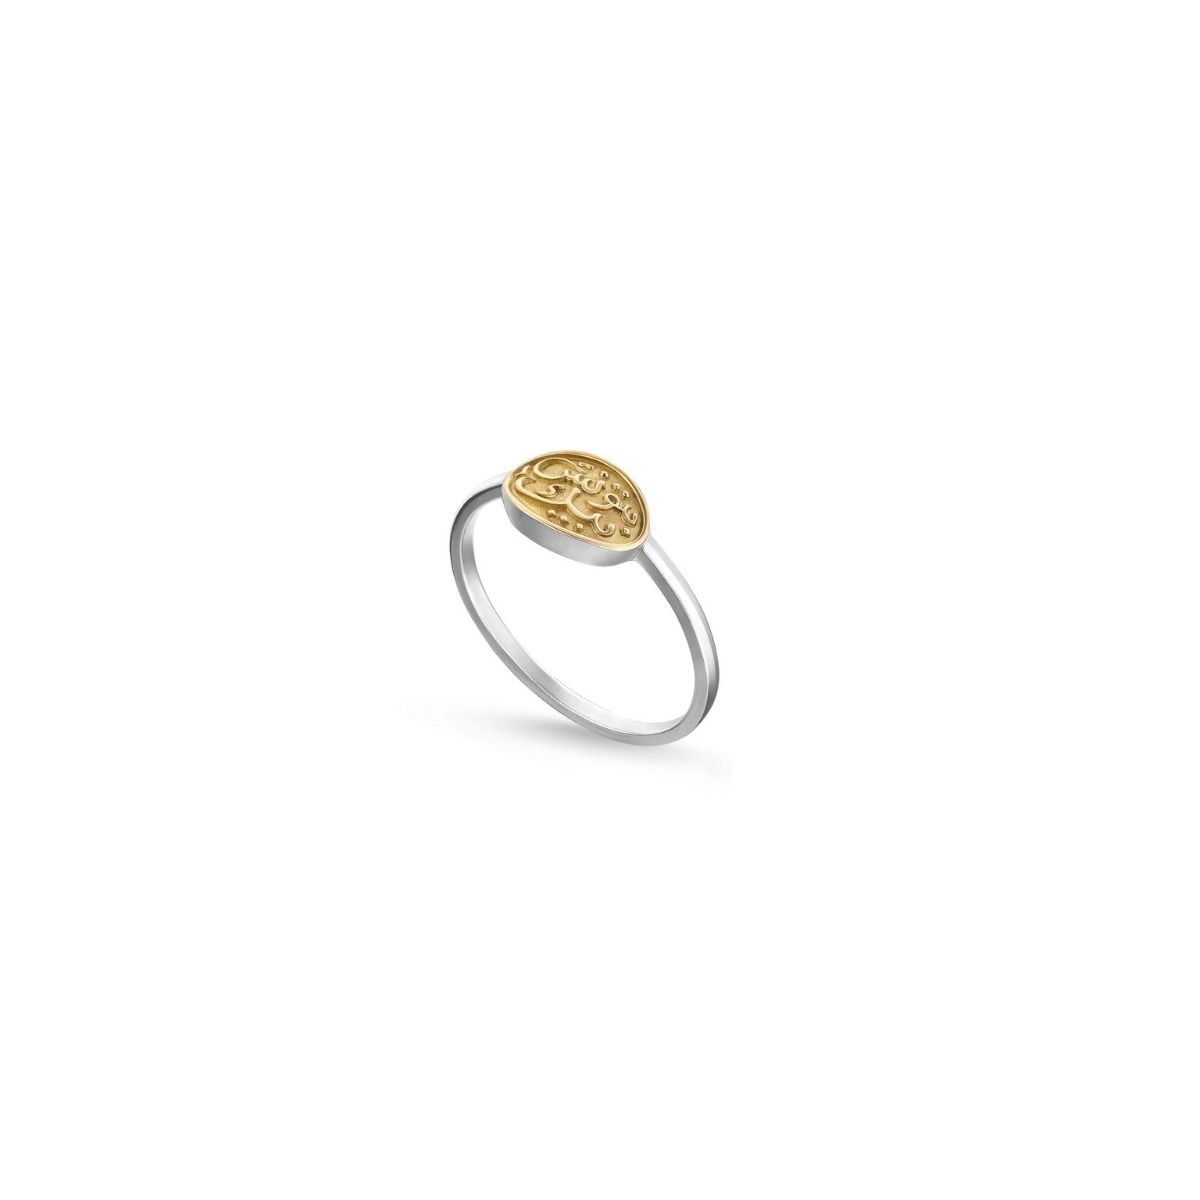 Warda Ring by Azza Fahmy - Designer Rings